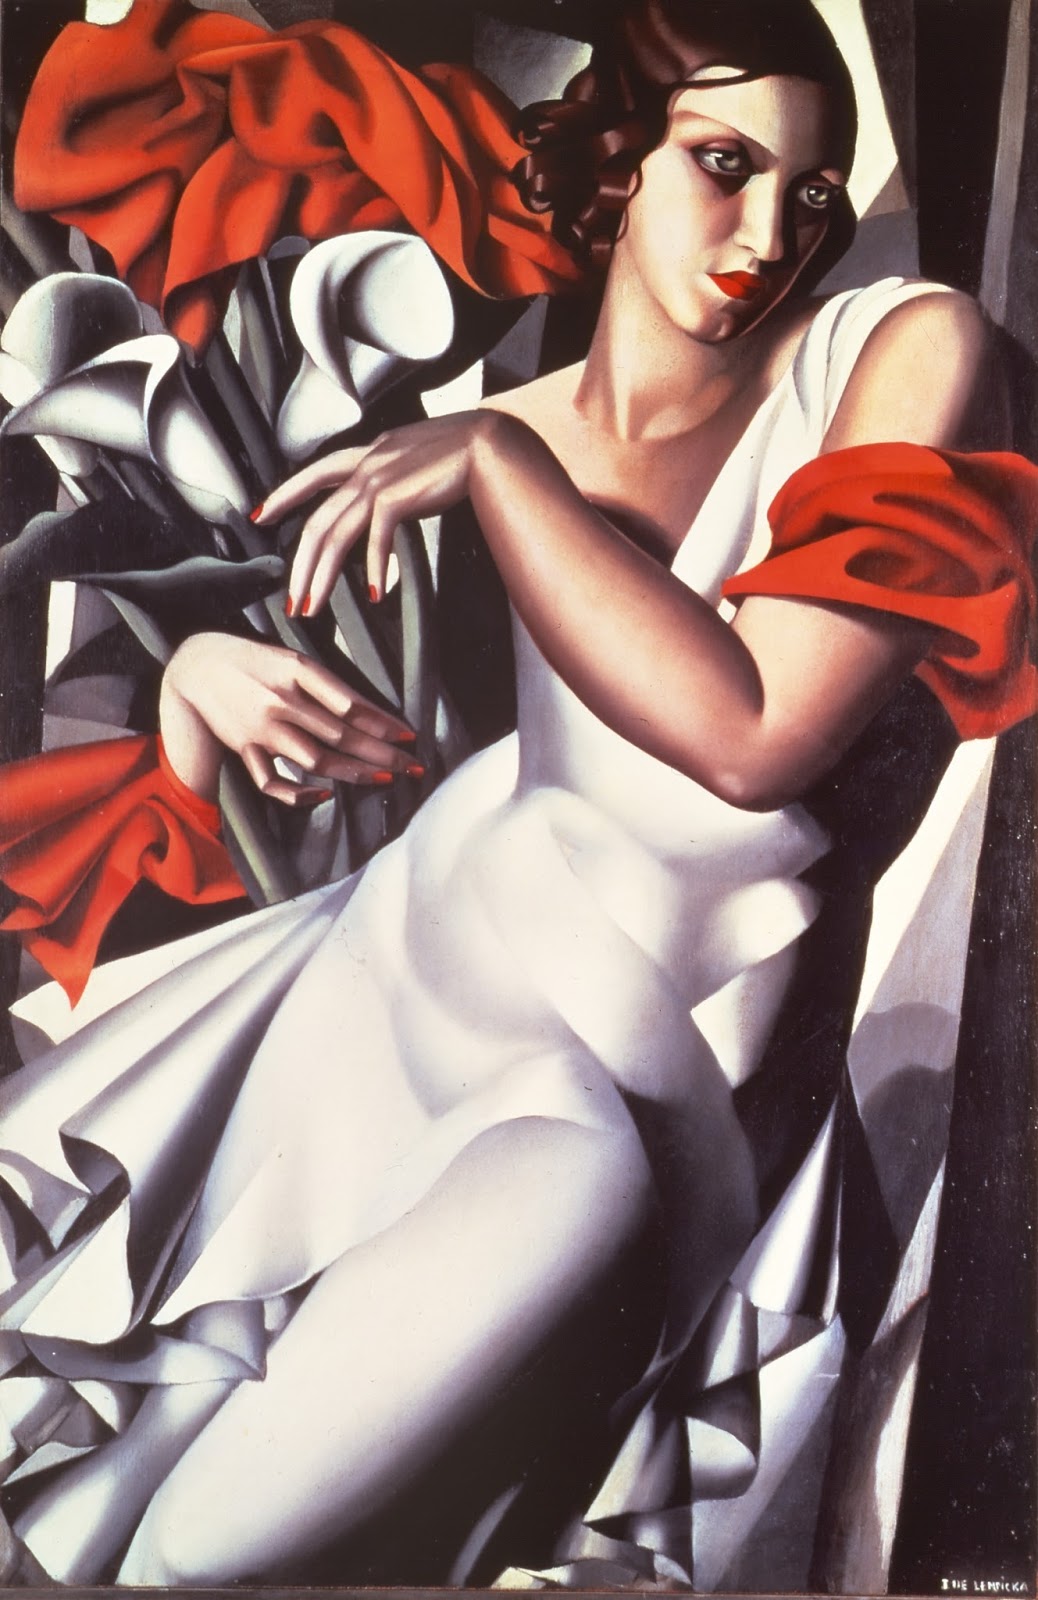 Tamara+de+Lempicka-1898-1980 (6).jpg